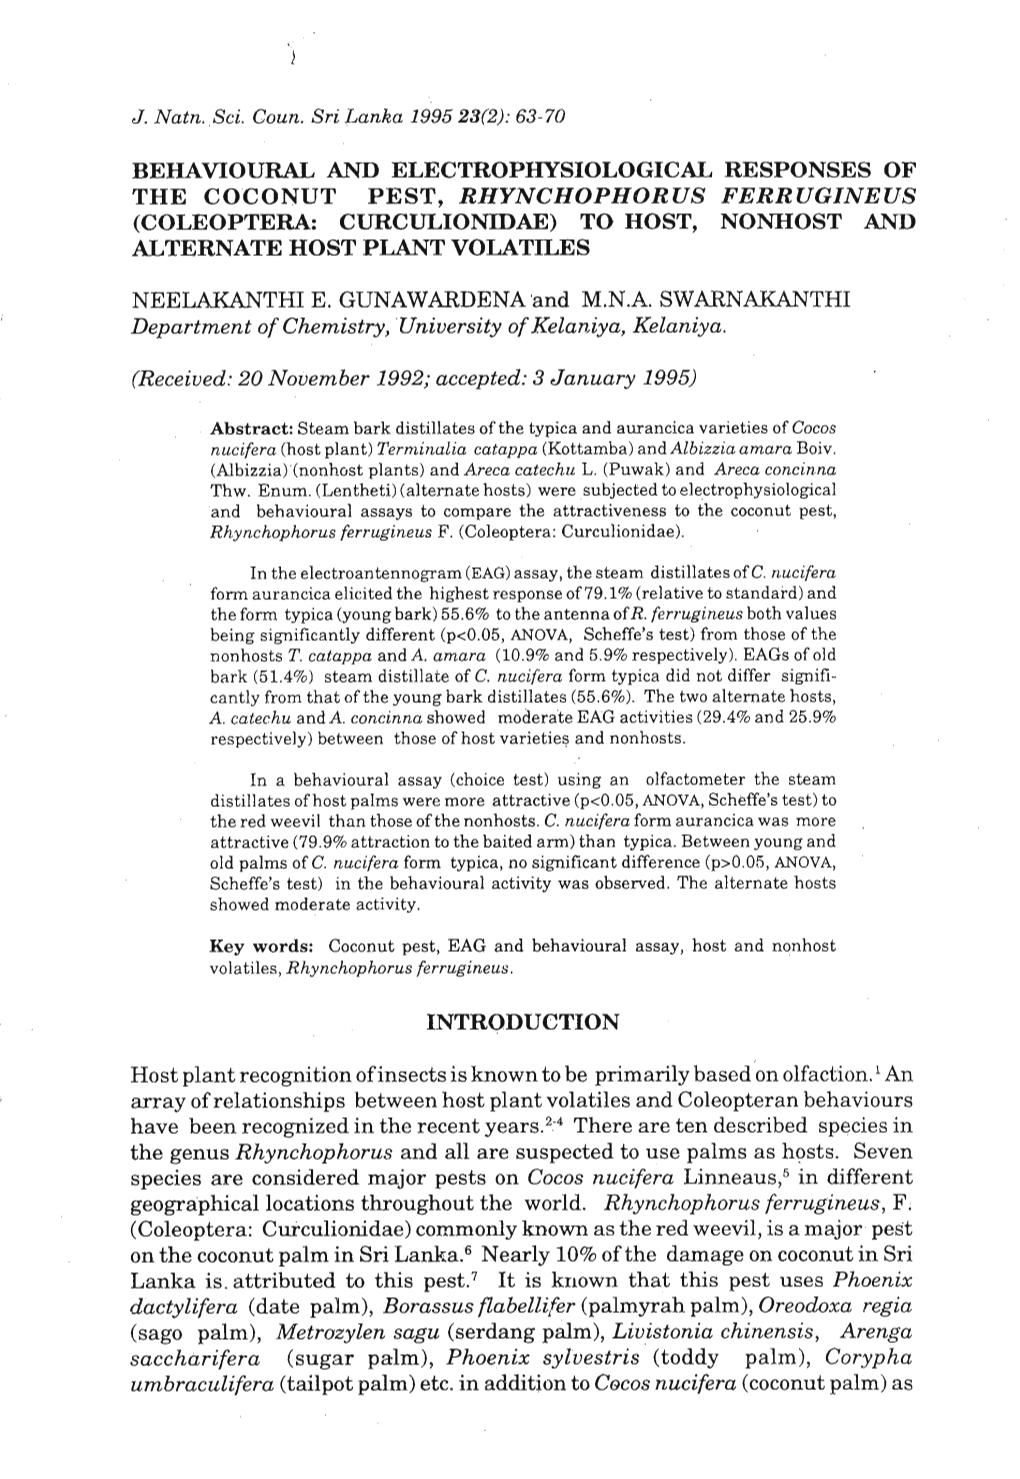 Behavioural and Electrophysiological Responses of the Coconut Pest, Rhynchophorus Ferrugineus